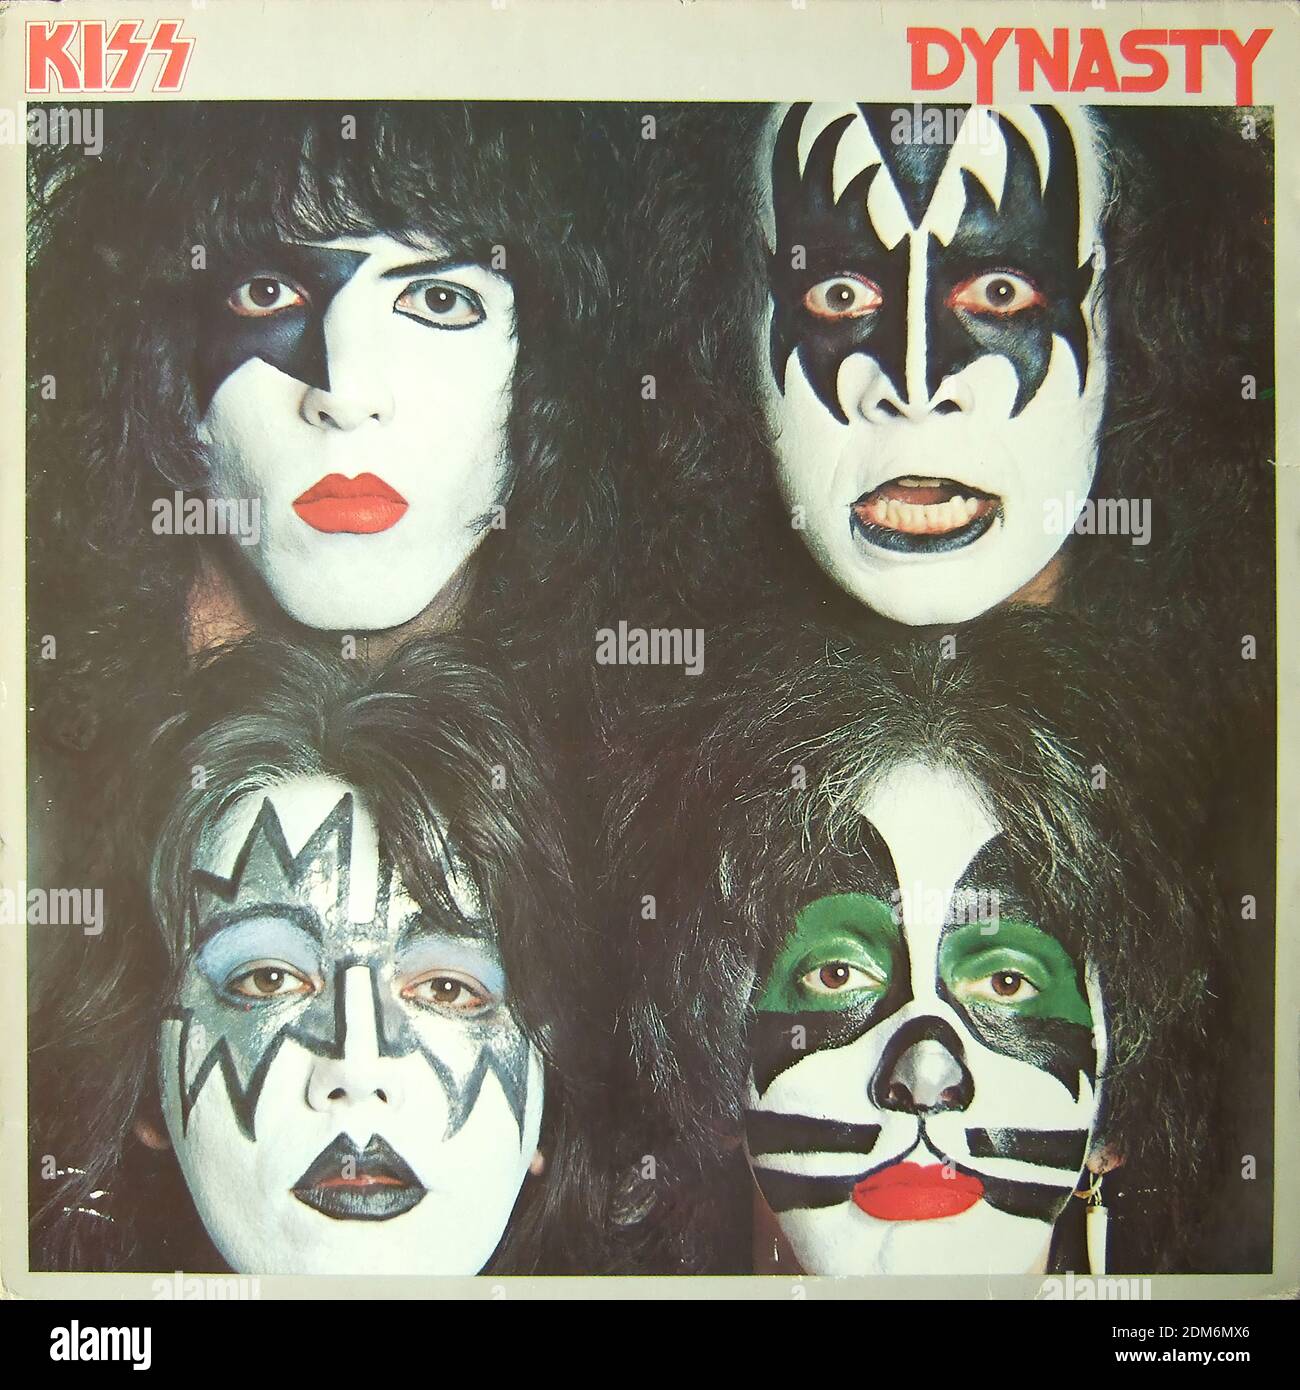 Kiss - Dynasty - Vintage Vinyl Album Cover Stockfotografie - Alamy